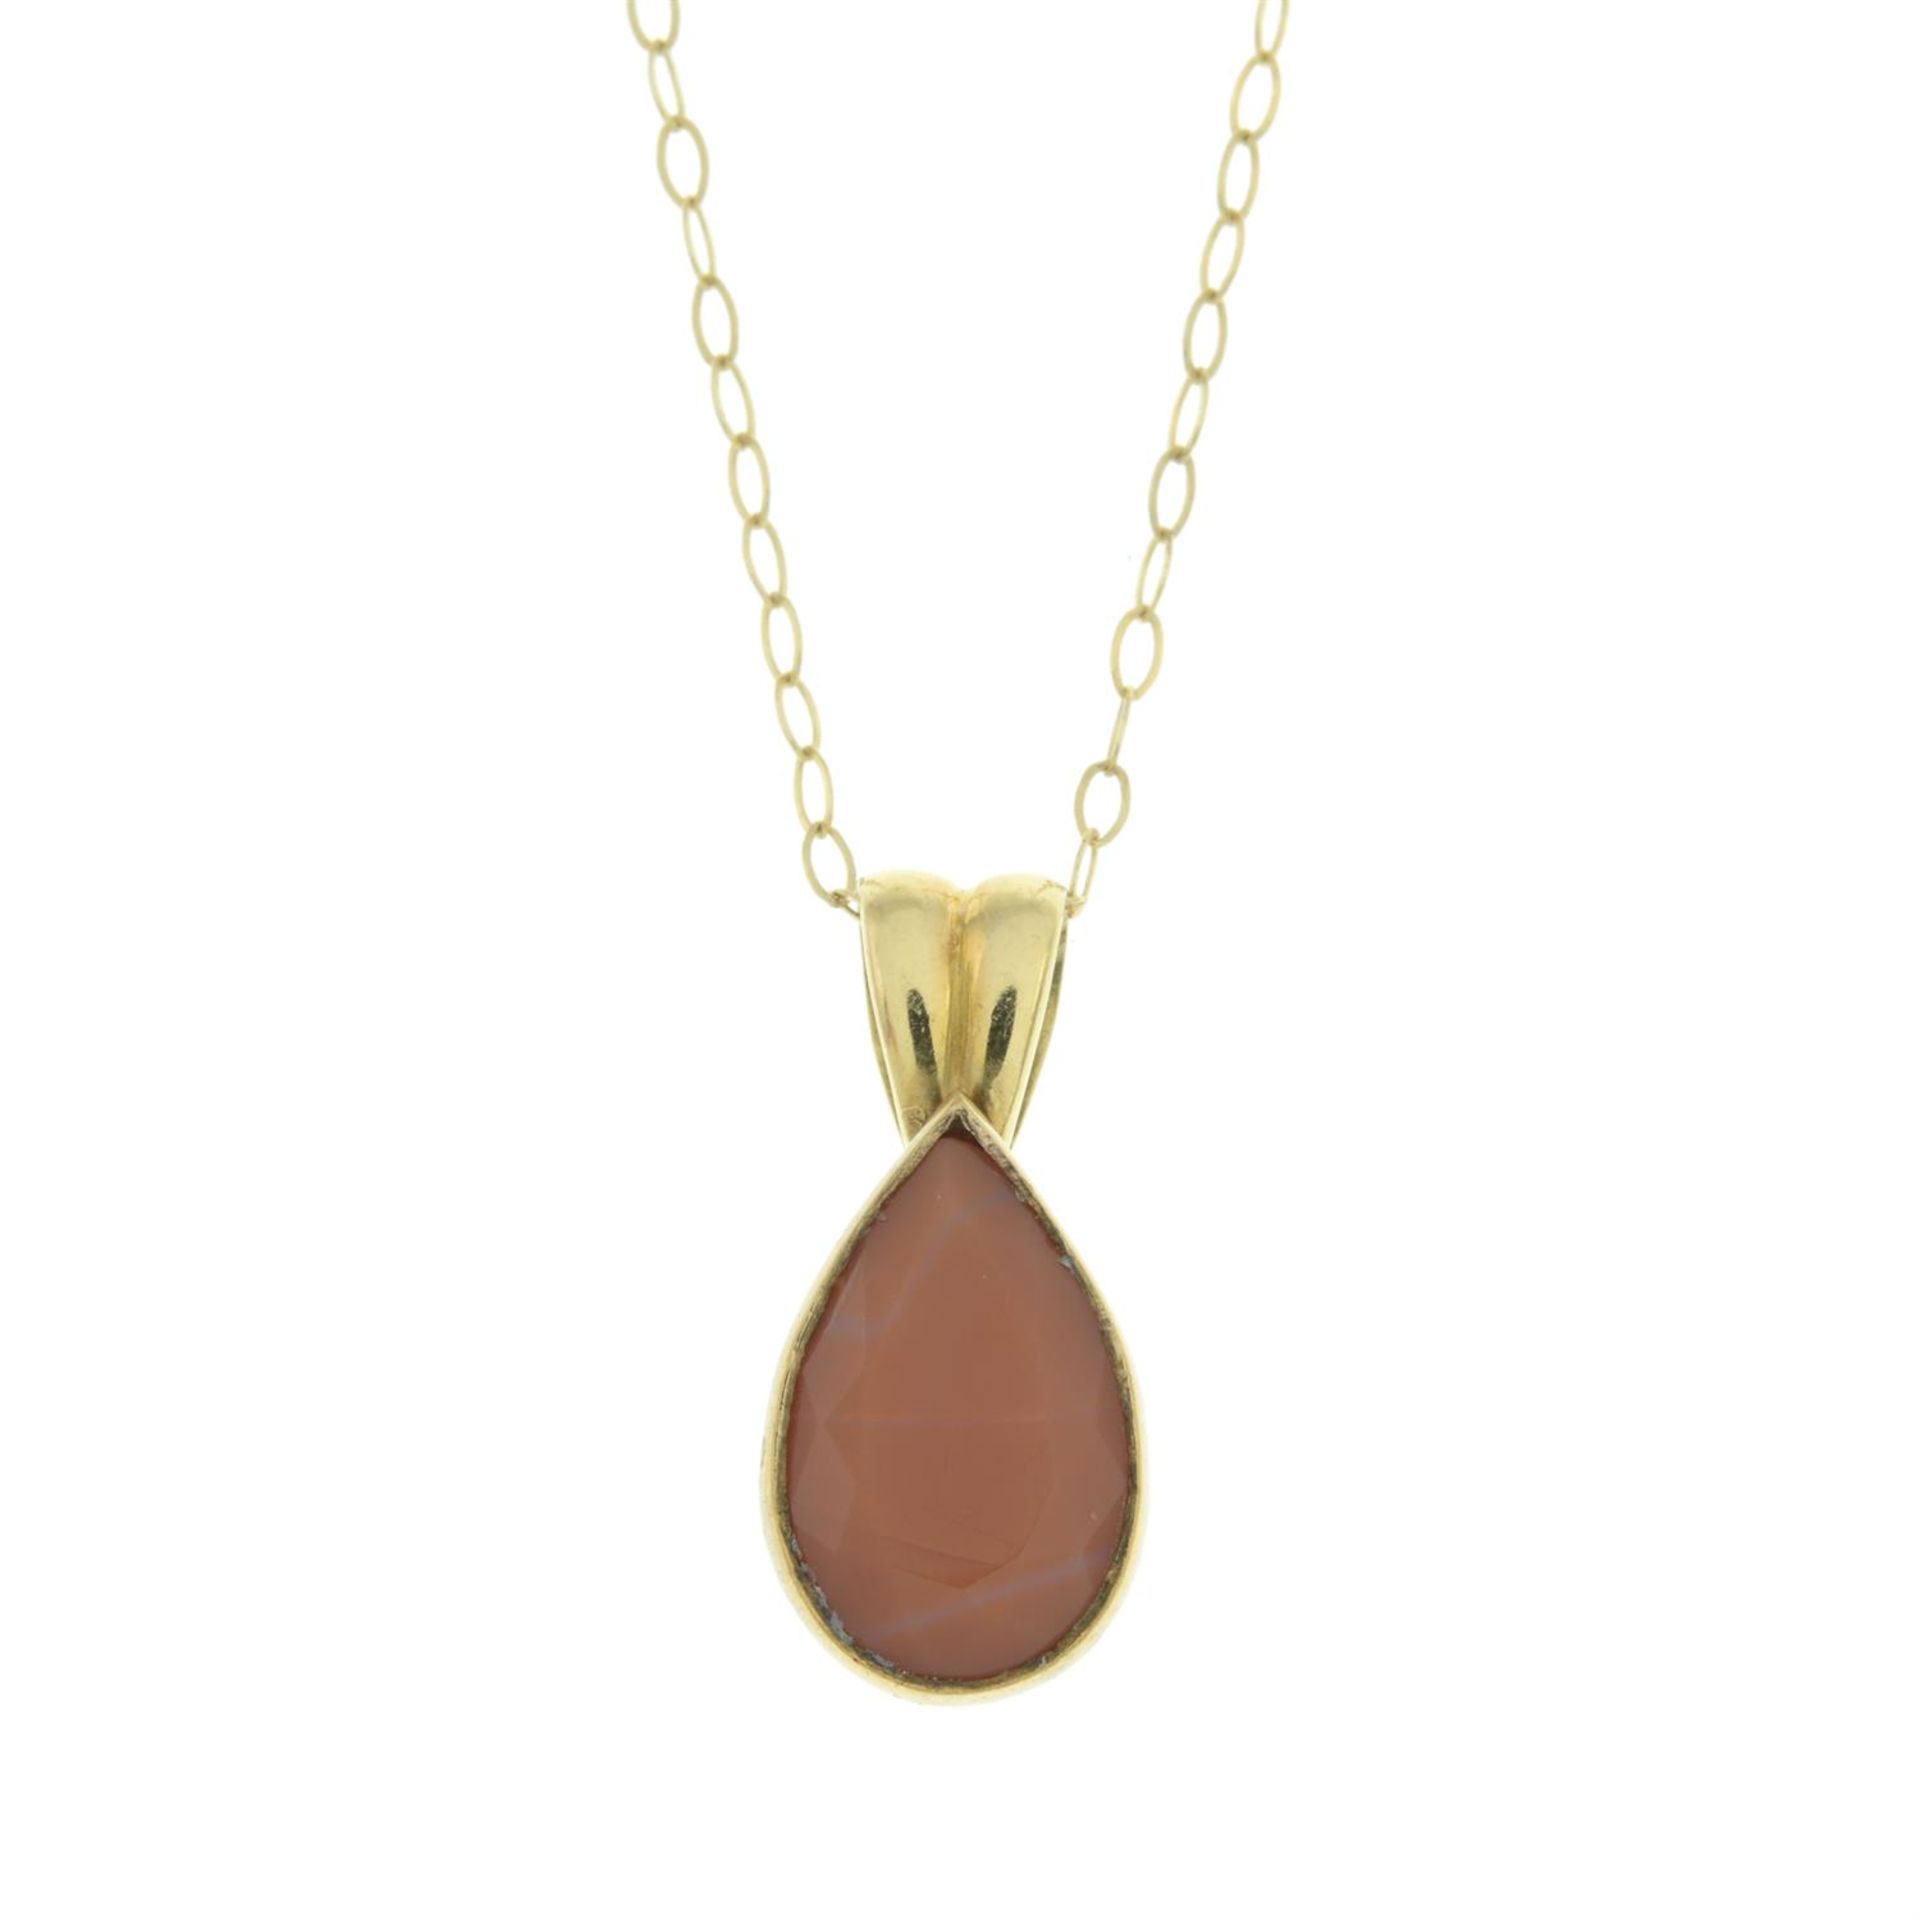 Pear-shape gem pendant, with chain